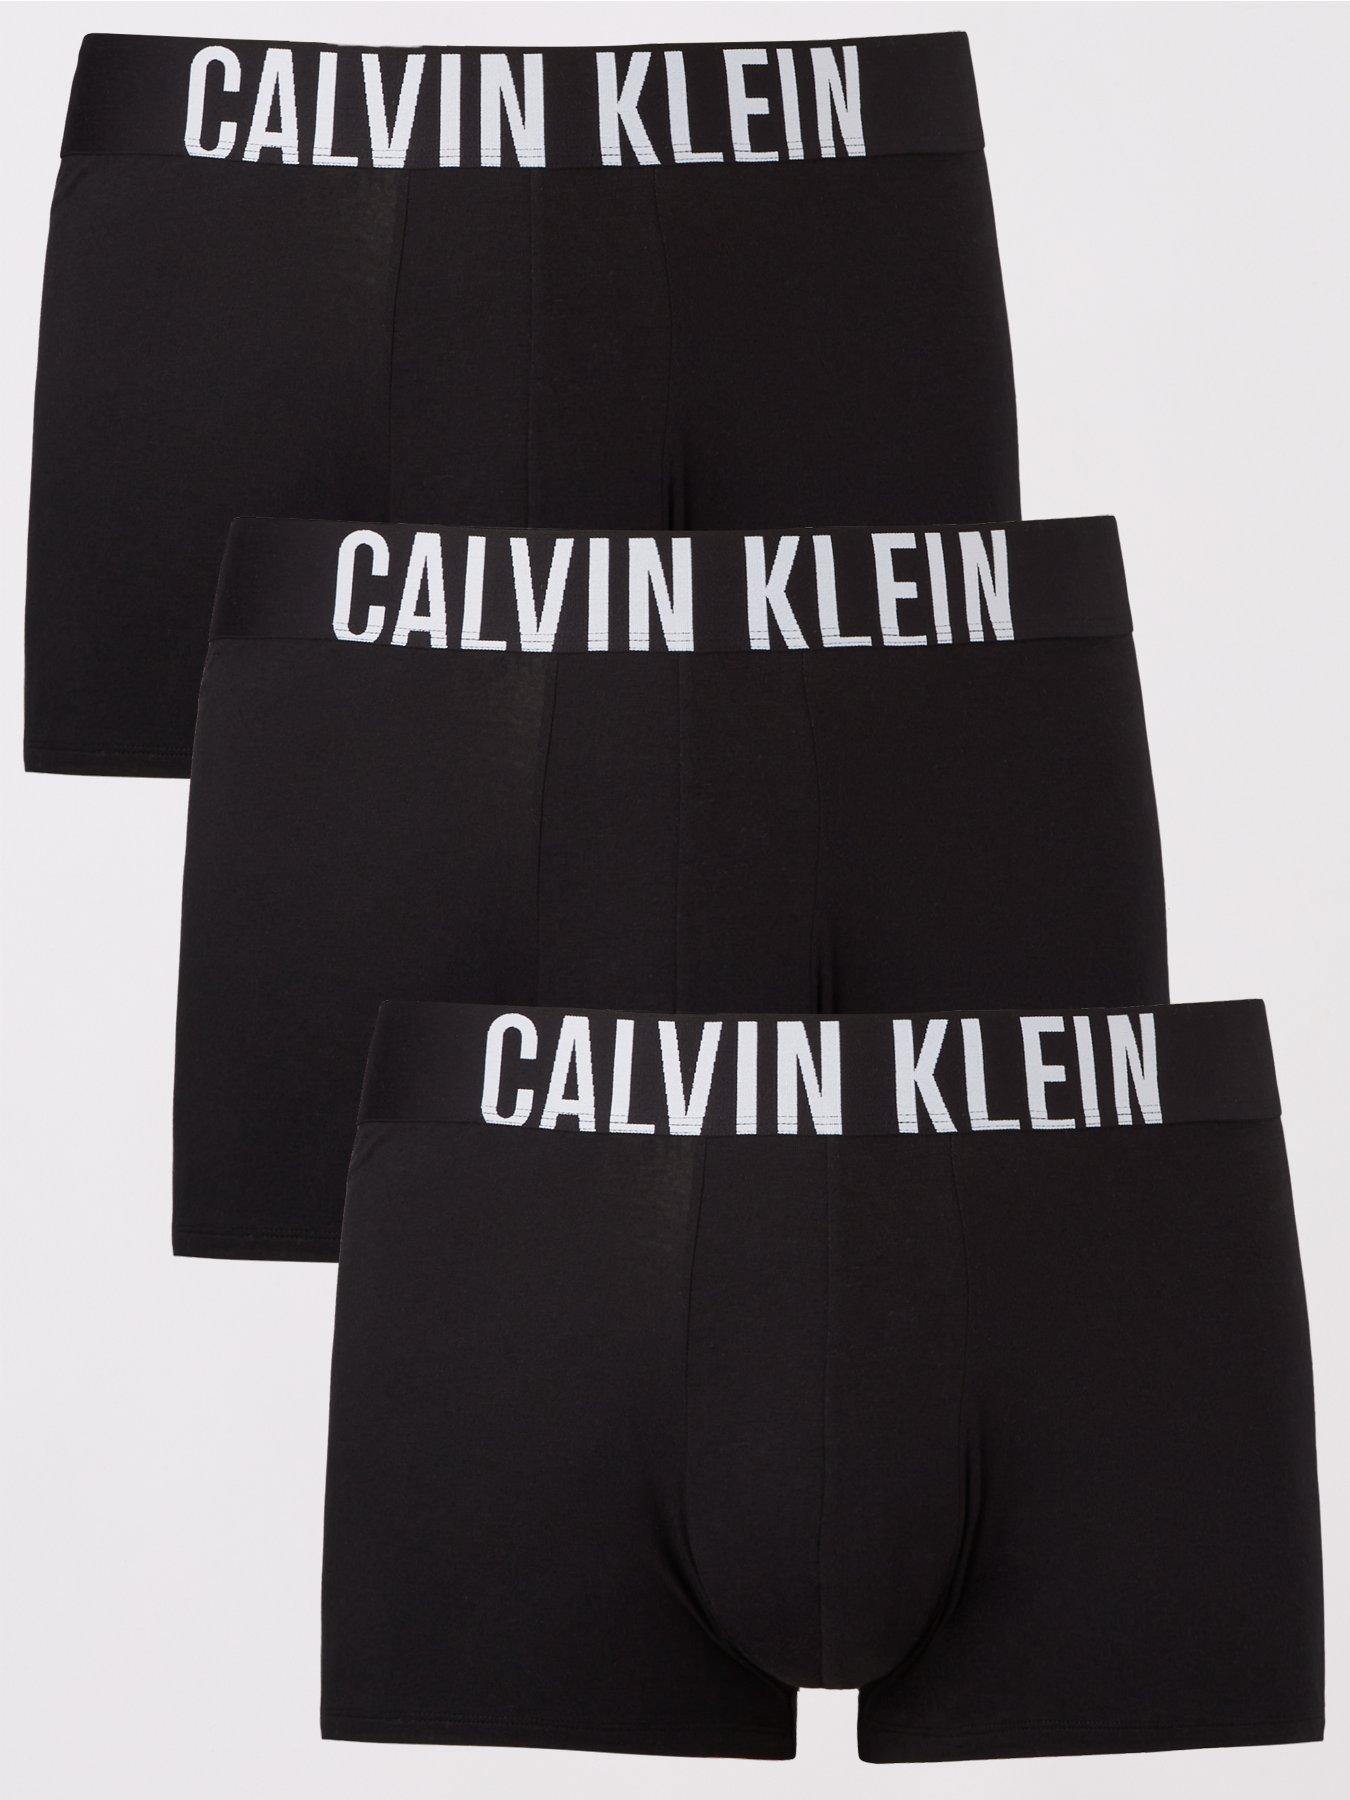 Calvin Klein CK One Mesh Trunk Azure